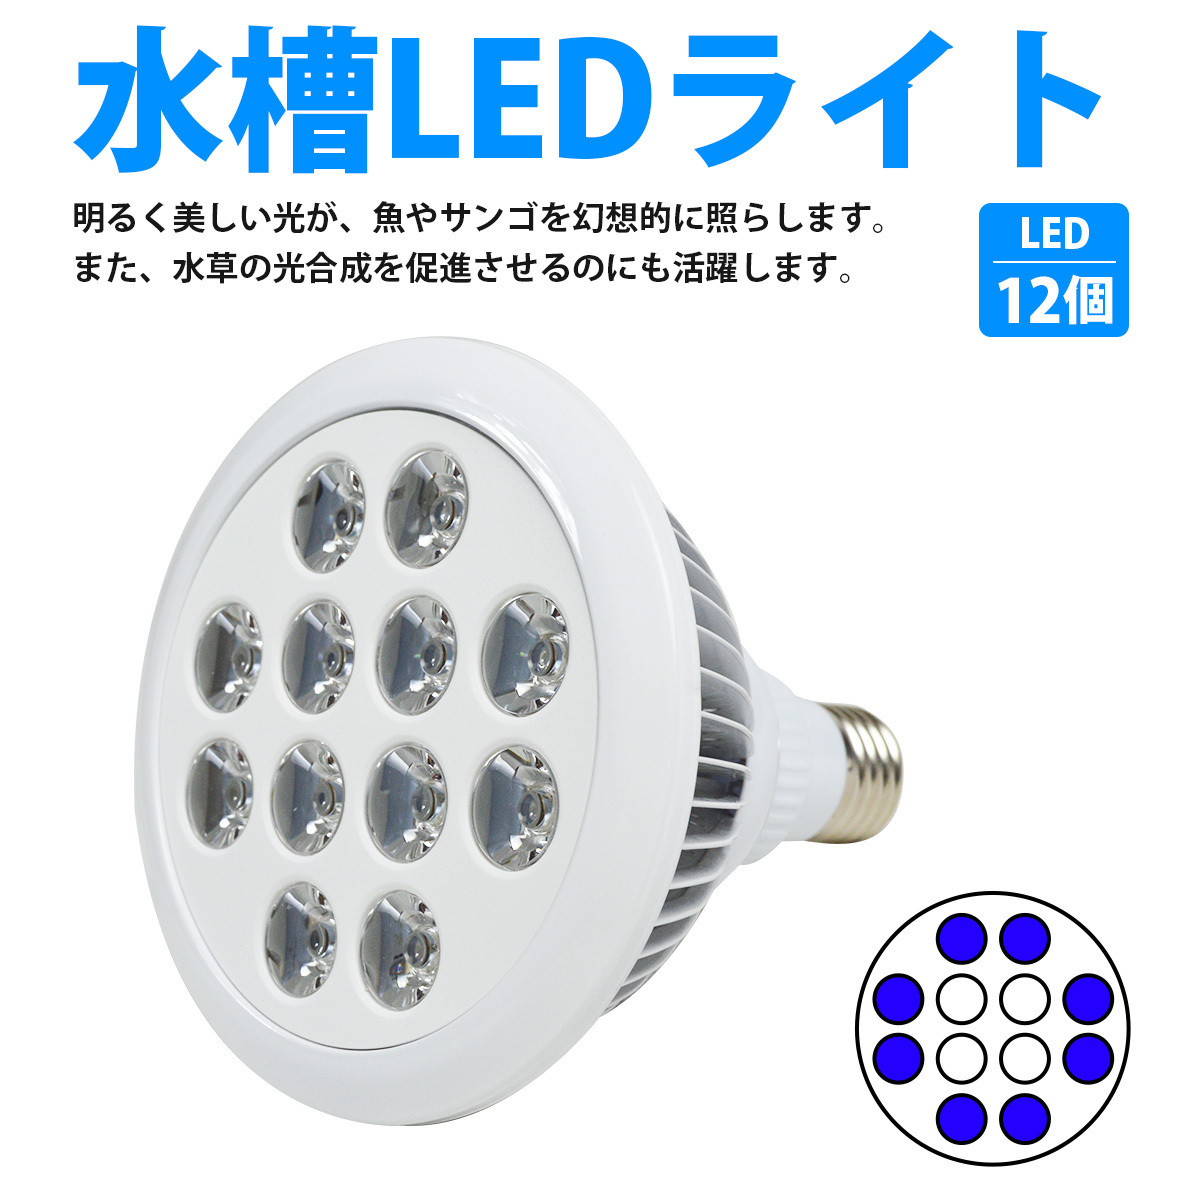 LED 電球 スポットライト 24W(2W×12)青8白4 水槽 照明 E26 水草 LEDスポットライト 電気 水草 サンゴ 熱帯魚 観賞魚 植物育成_画像2